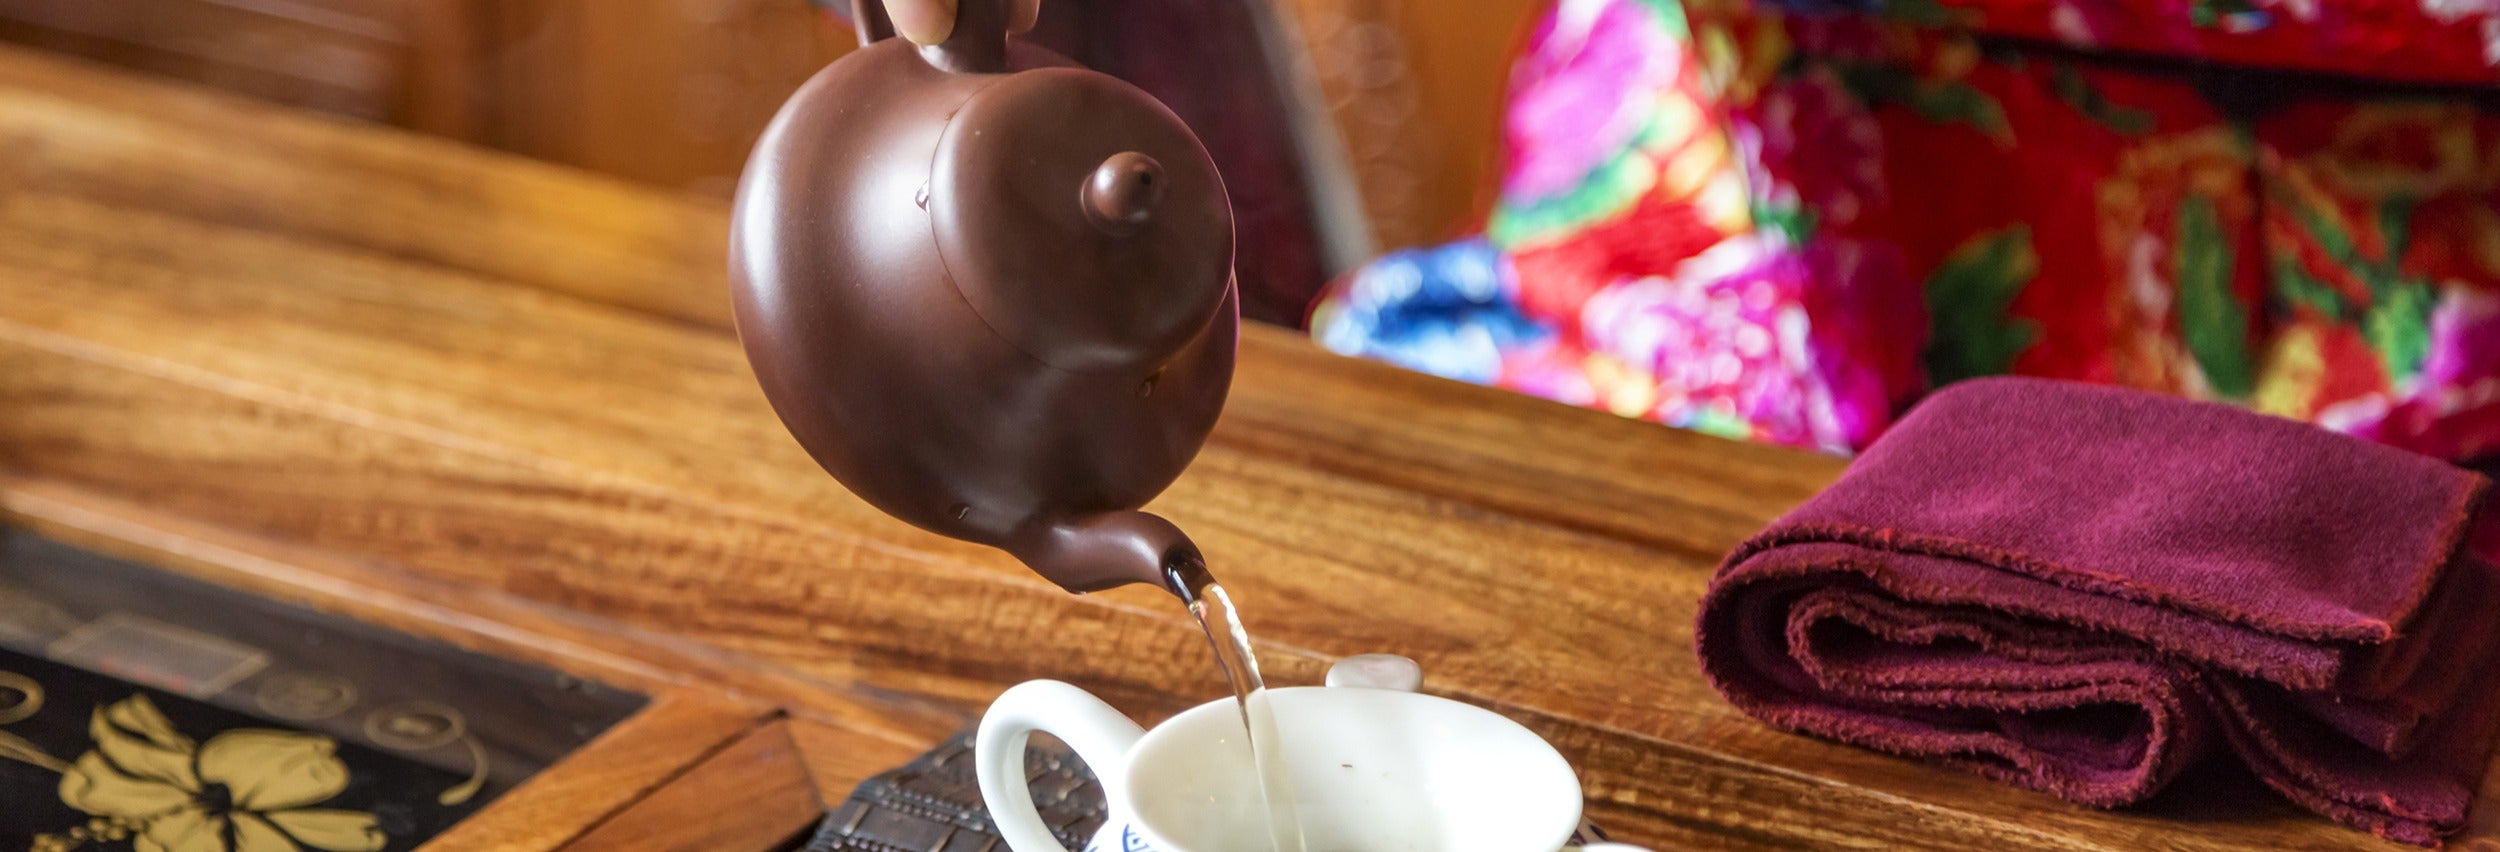 Cerimônia chinesa do chá